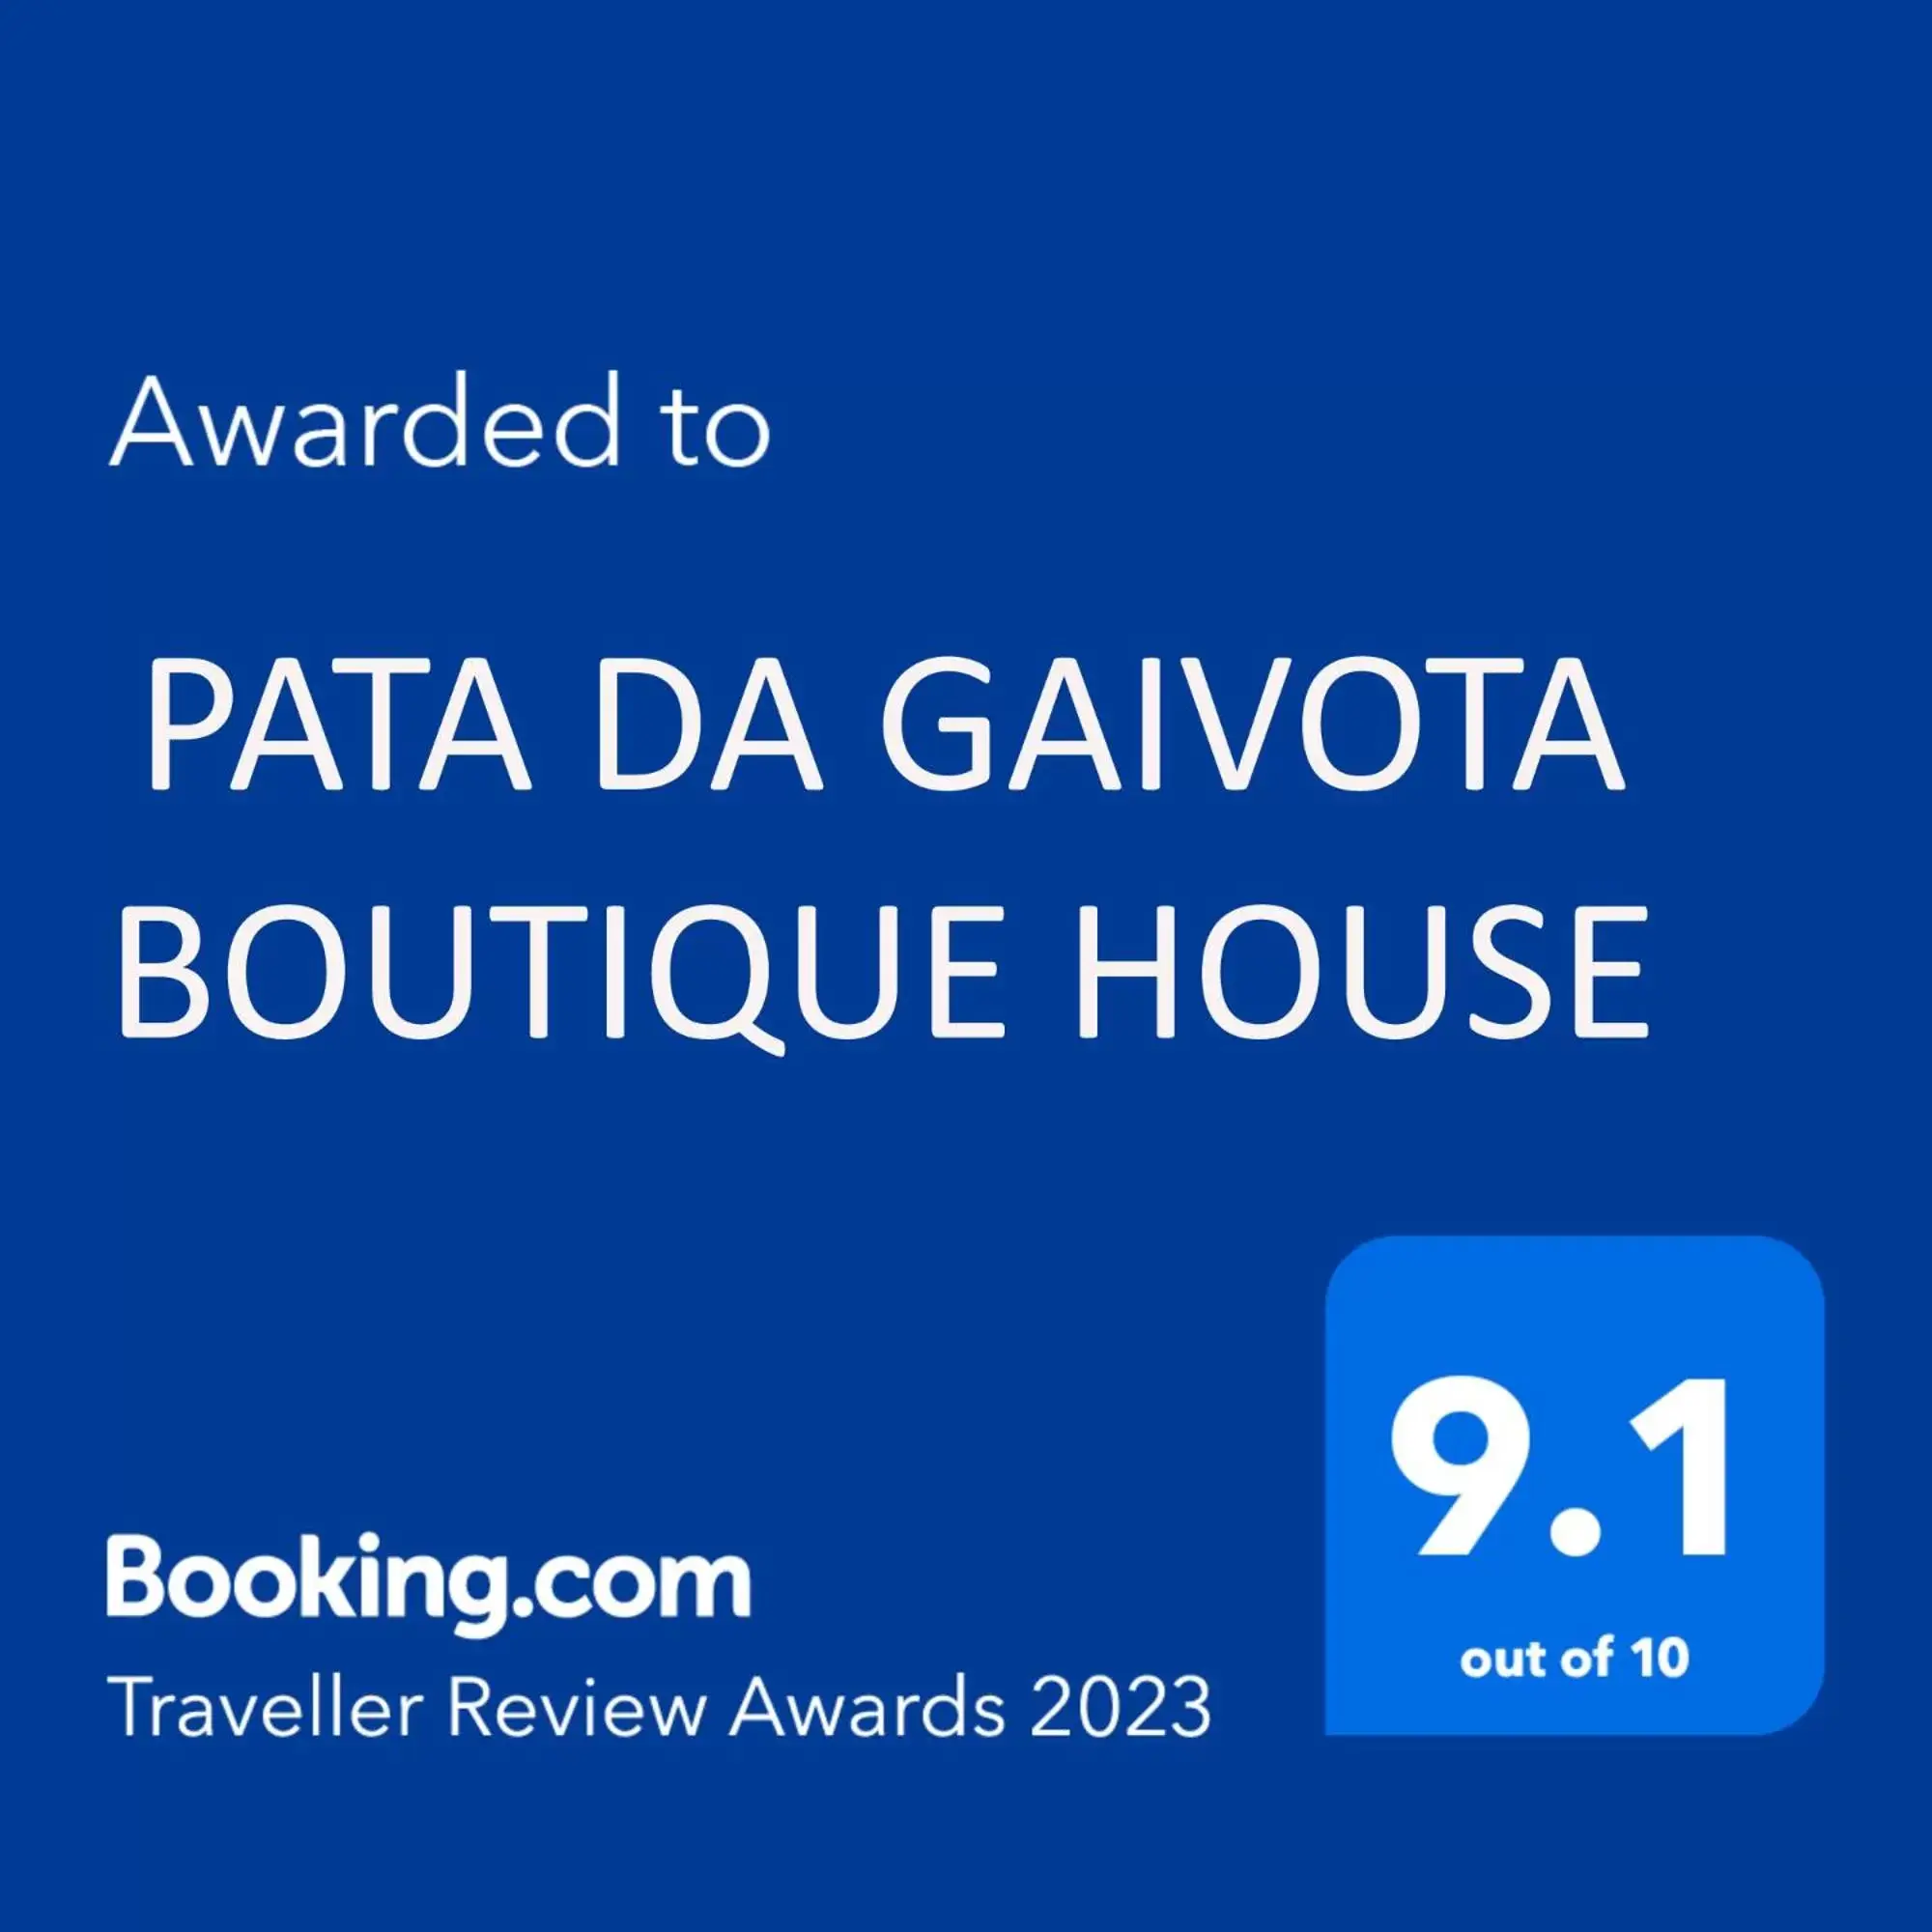 Property building, Logo/Certificate/Sign/Award in Pata da Gaivota Boutique House